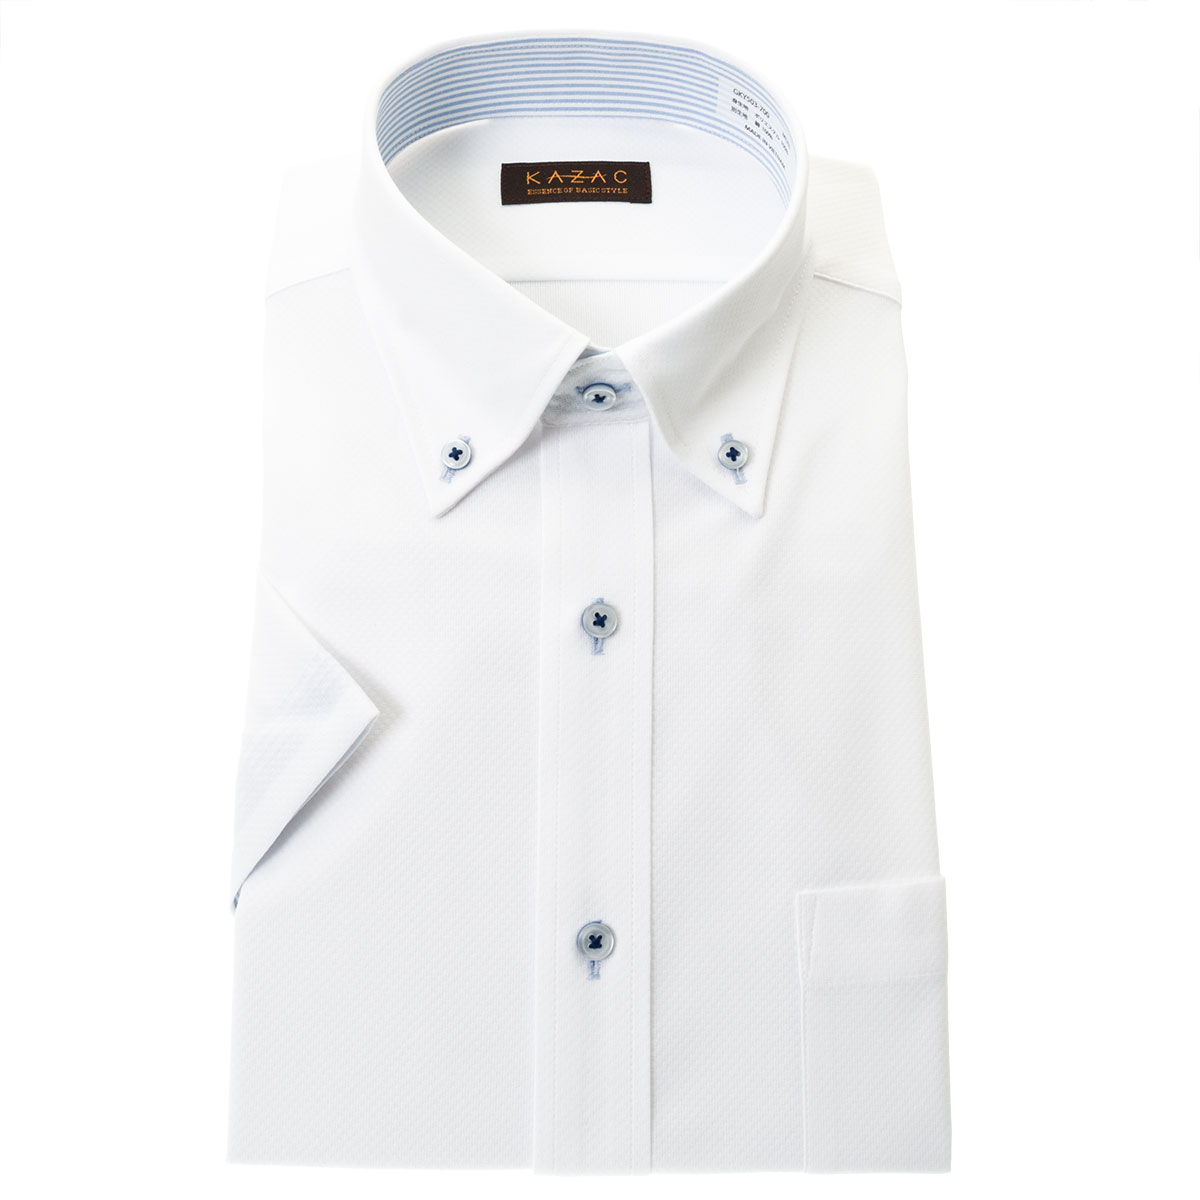 KAZAC 半袖 ニットシャツ(裄詰不可)ボタンダウン ホワイト ワイシャツ